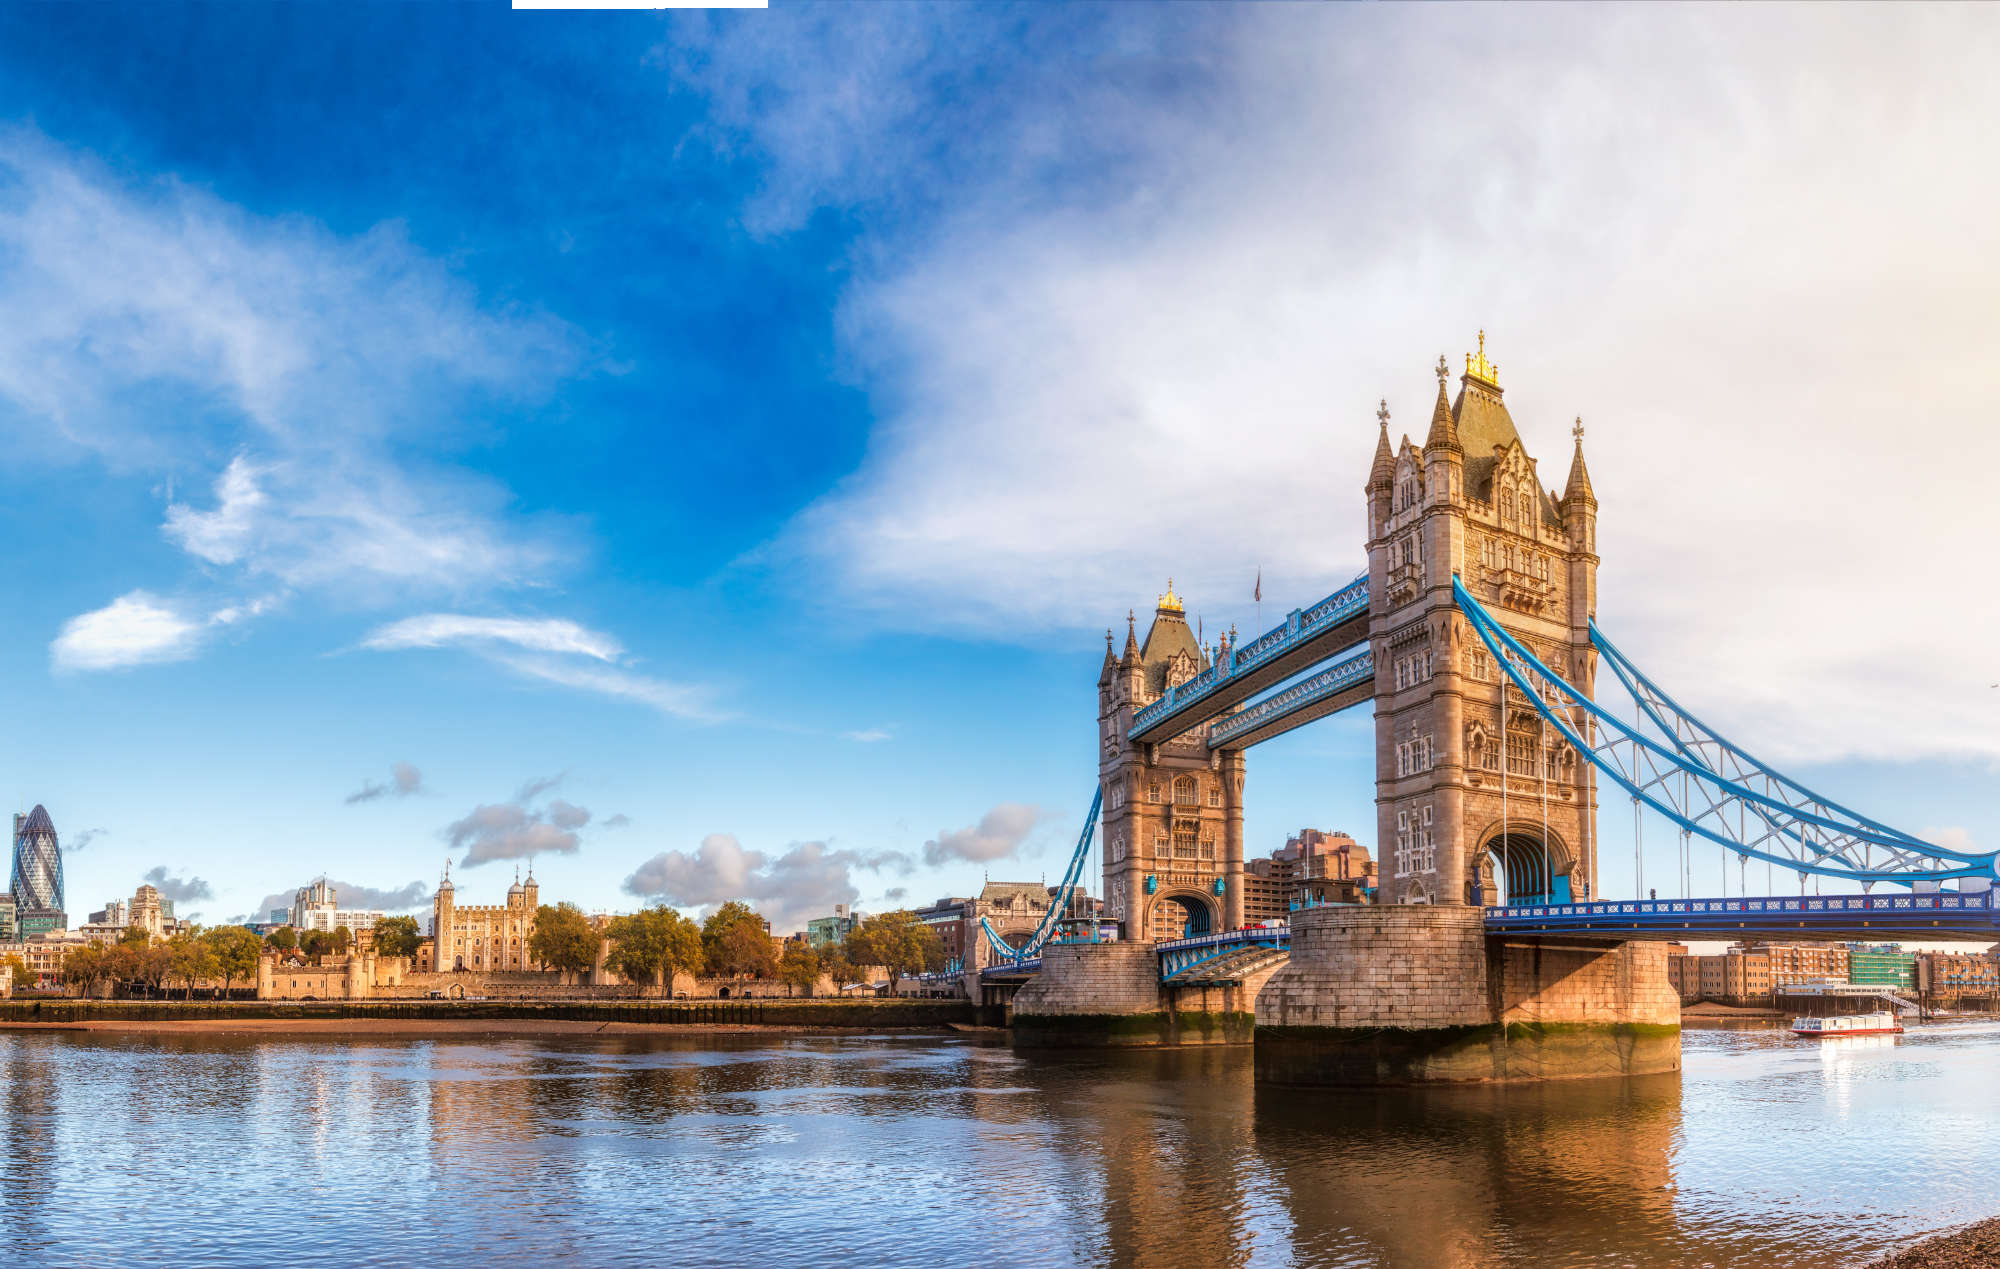 London's tower bridge and city skyline